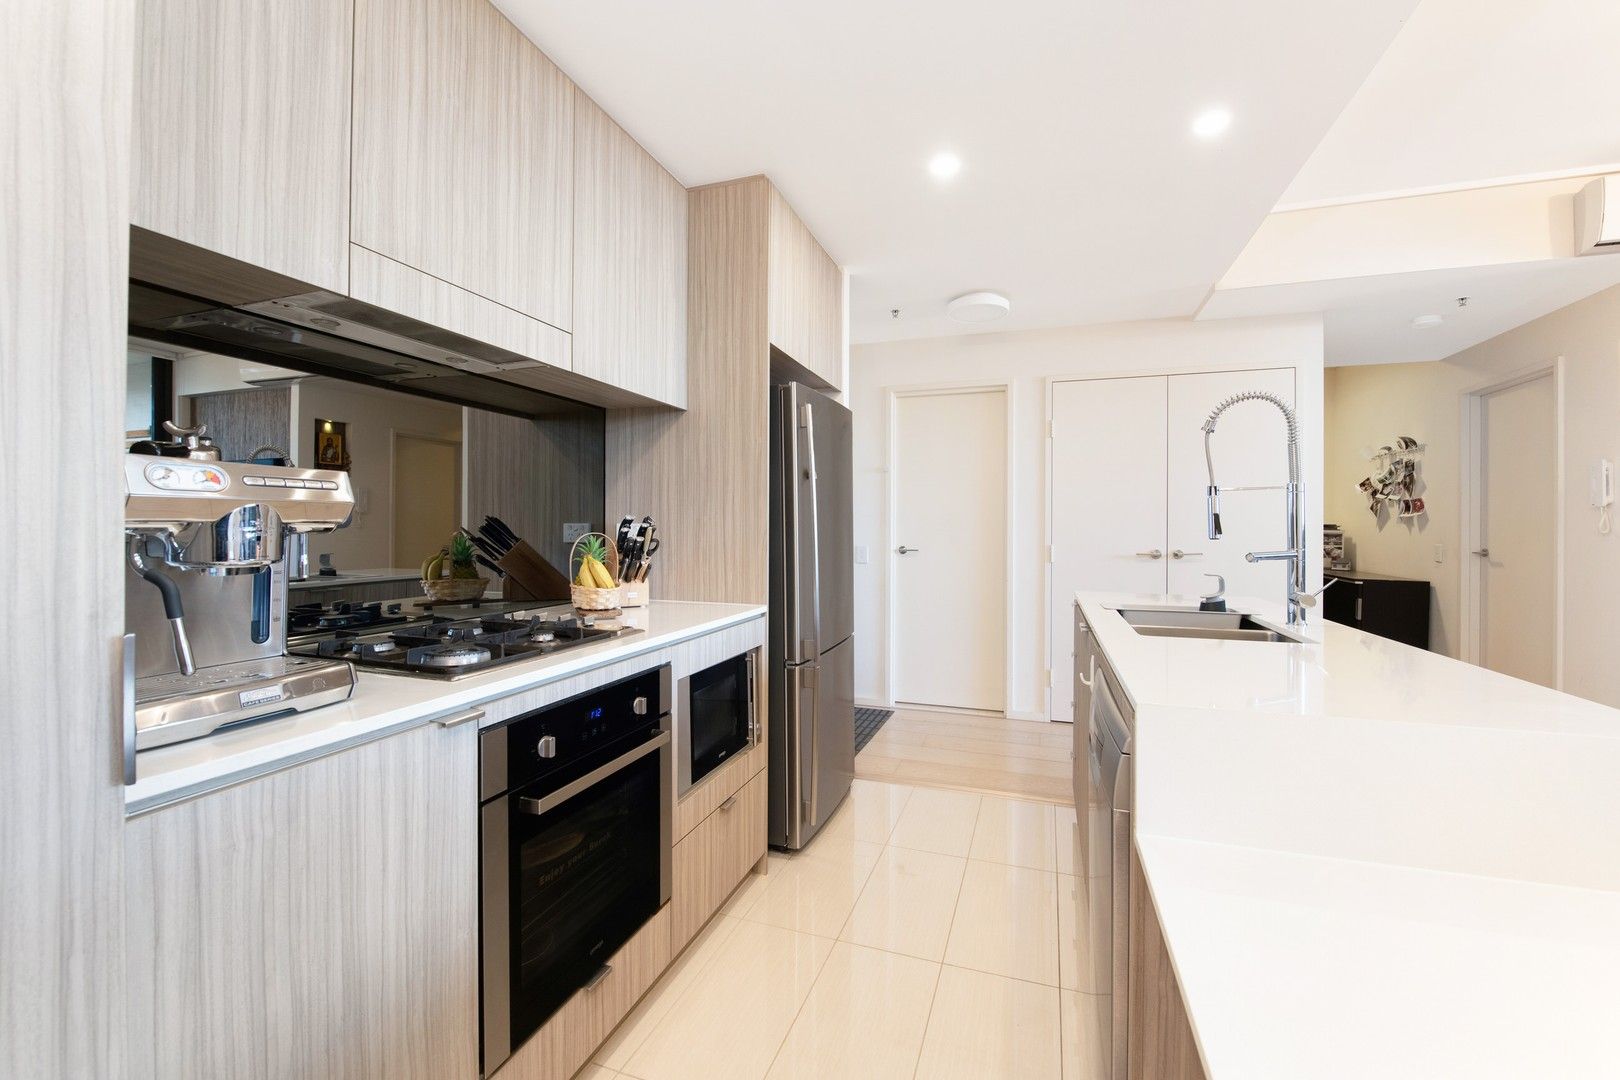 2 bedrooms Apartment / Unit / Flat in 1005/7 Washington Avenue RIVERWOOD NSW, 2210